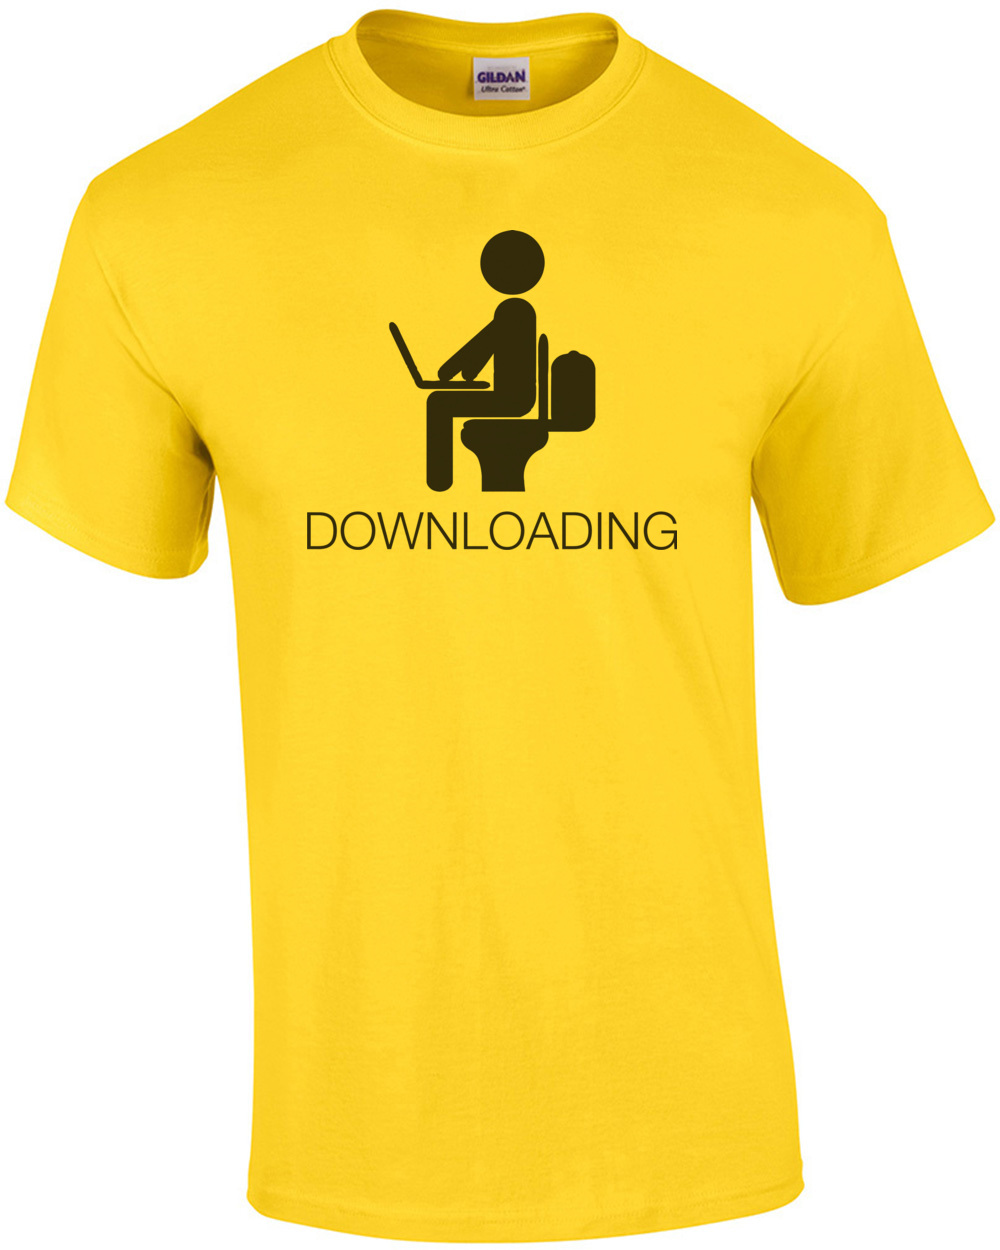 Downloading - Toilet Humor T-Shirt